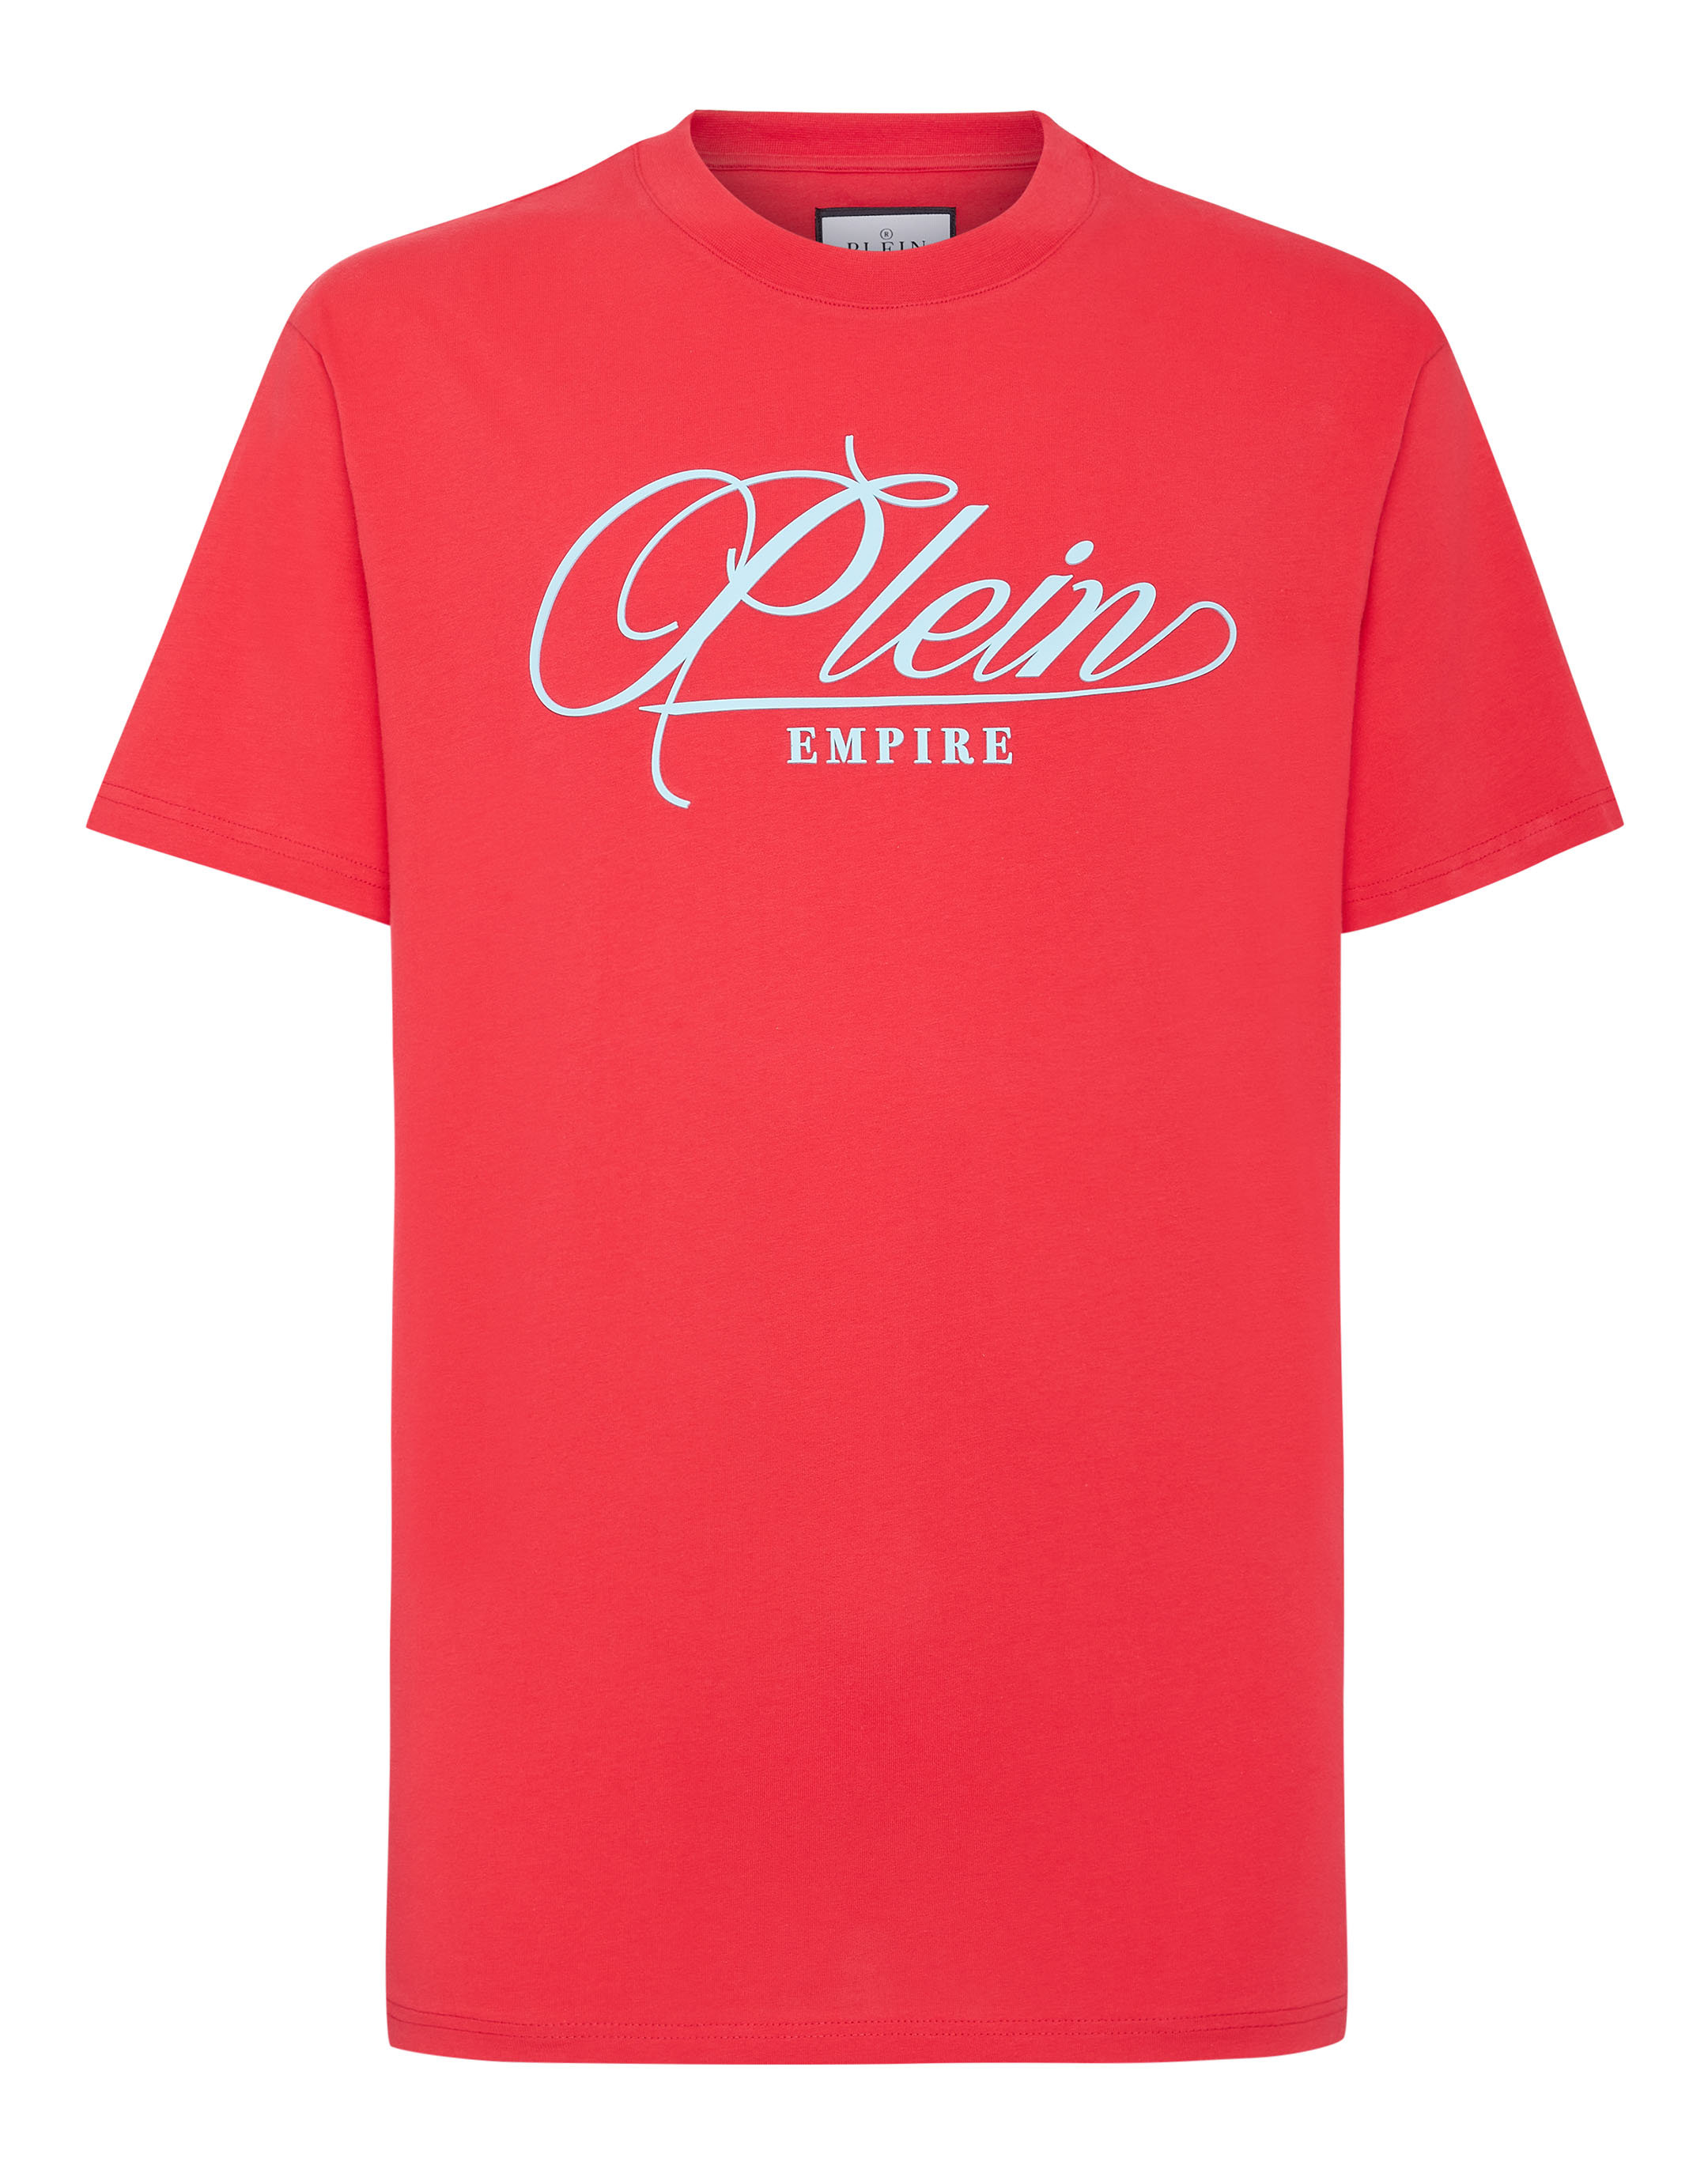 T-shirt Round Neck SS Plein Empire | Philipp Plein Outlet